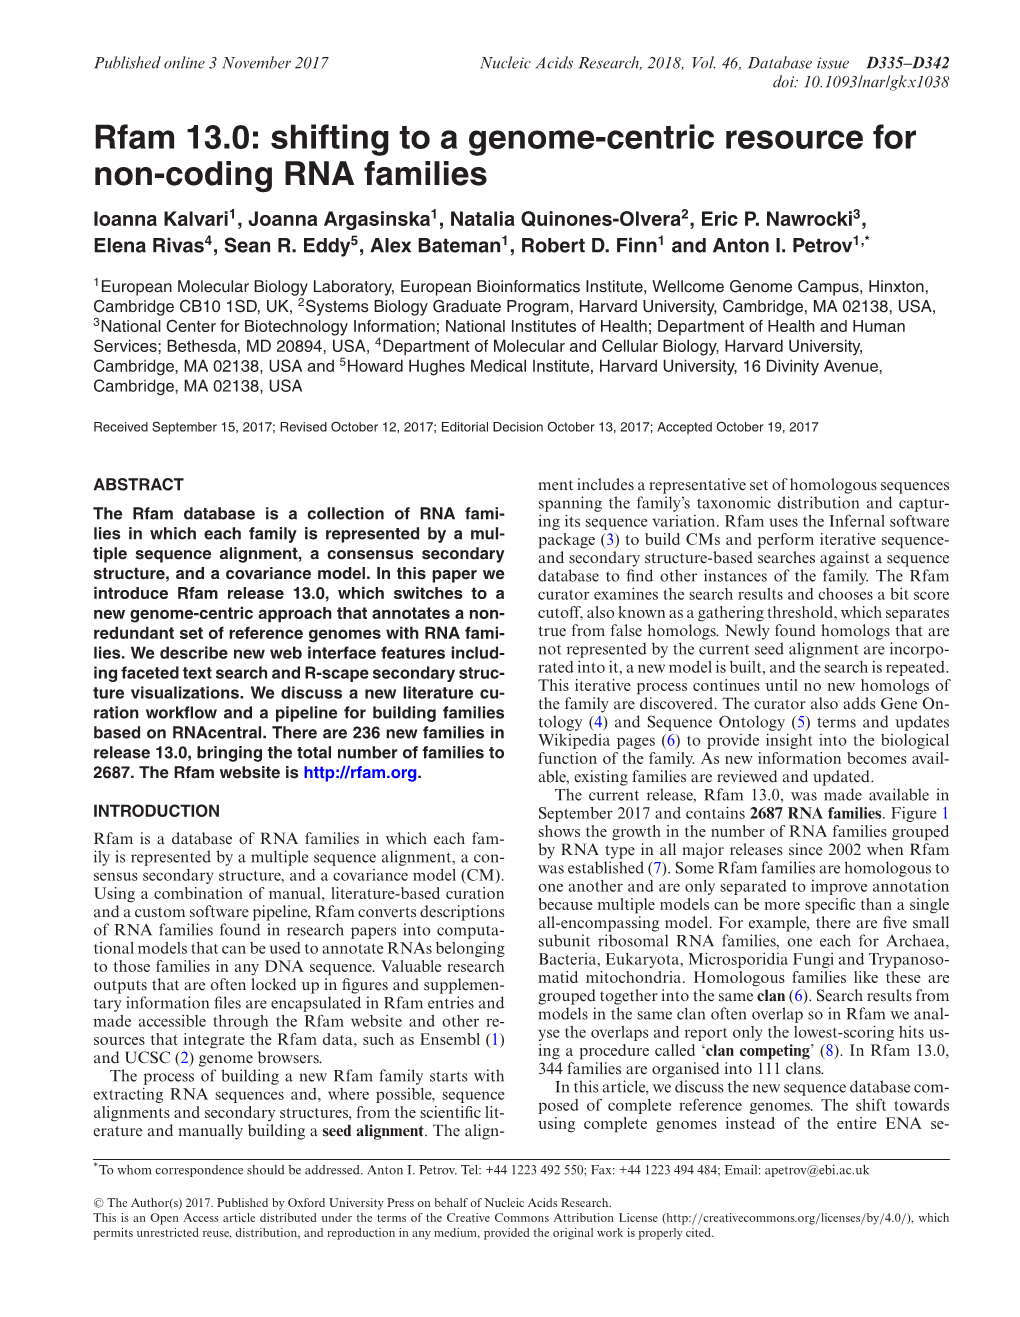 Shifting to a Genome-Centric Resource for Non-Coding RNA Families Ioanna Kalvari1, Joanna Argasinska1, Natalia Quinones-Olvera2,Ericp.Nawrocki3, Elena Rivas4, Sean R